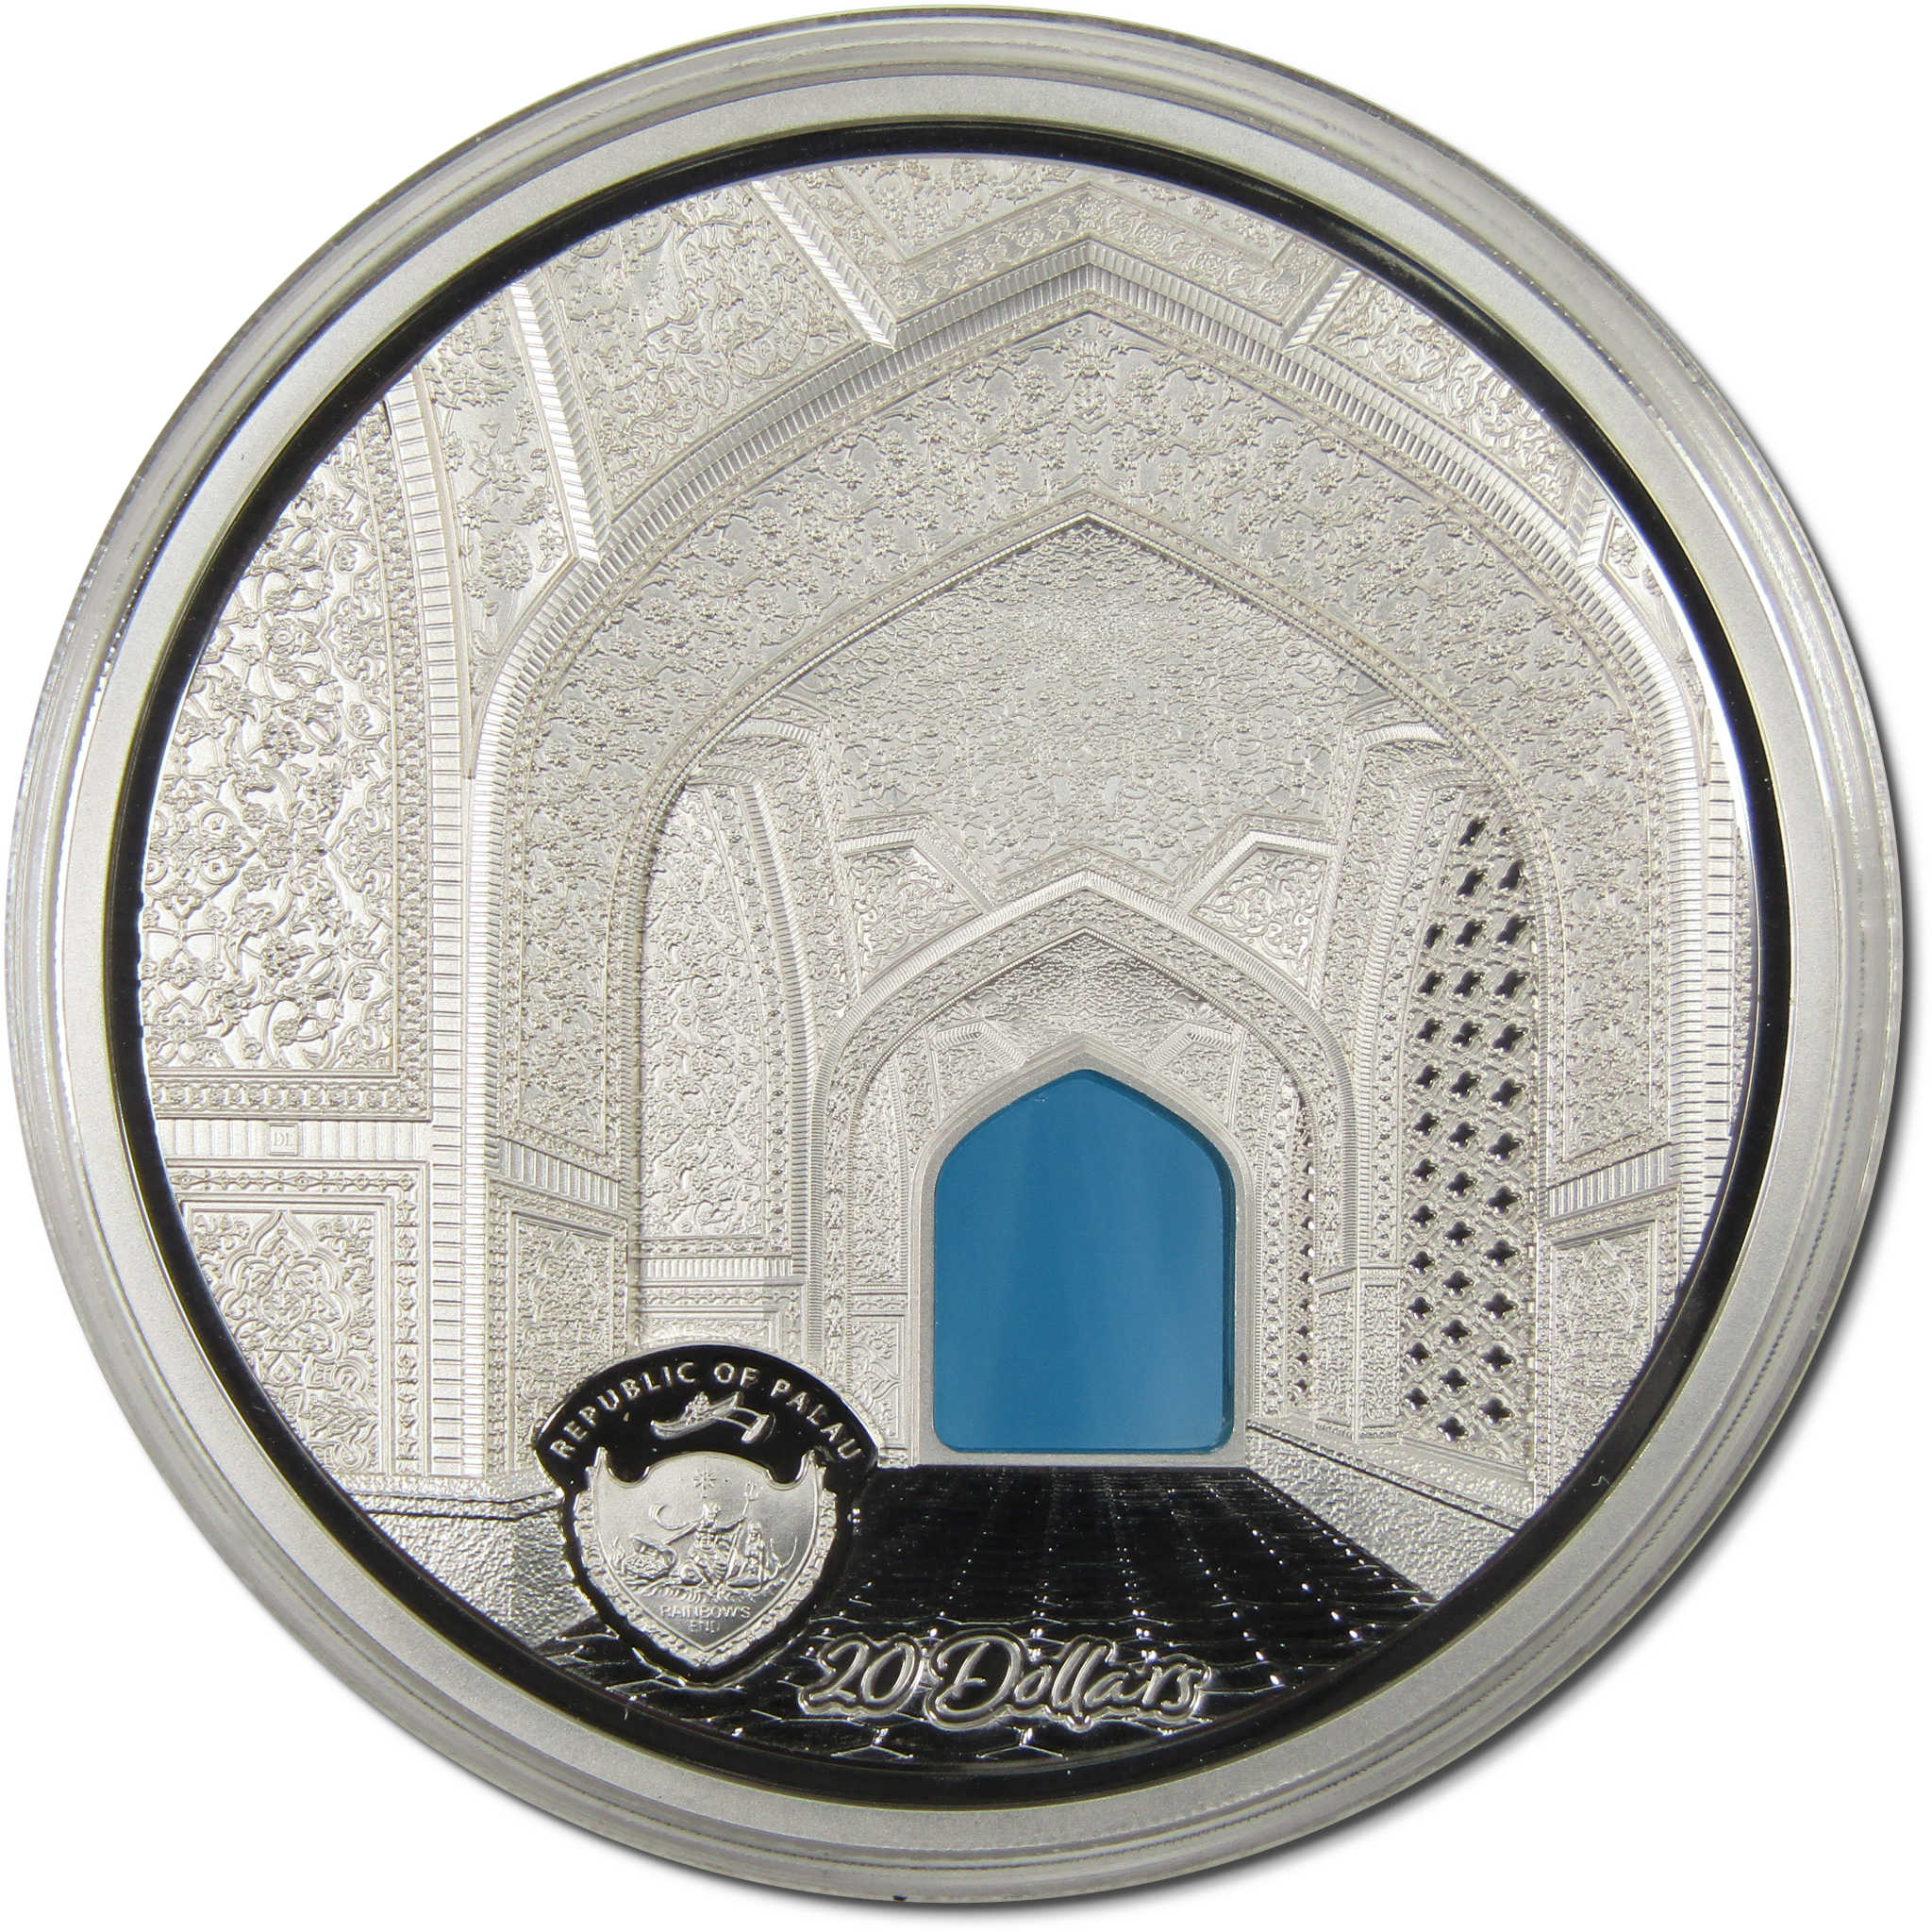 Tiffany Art Isfahan 3 oz .999 Silver $20 Proof Coin 2020 Palau COA